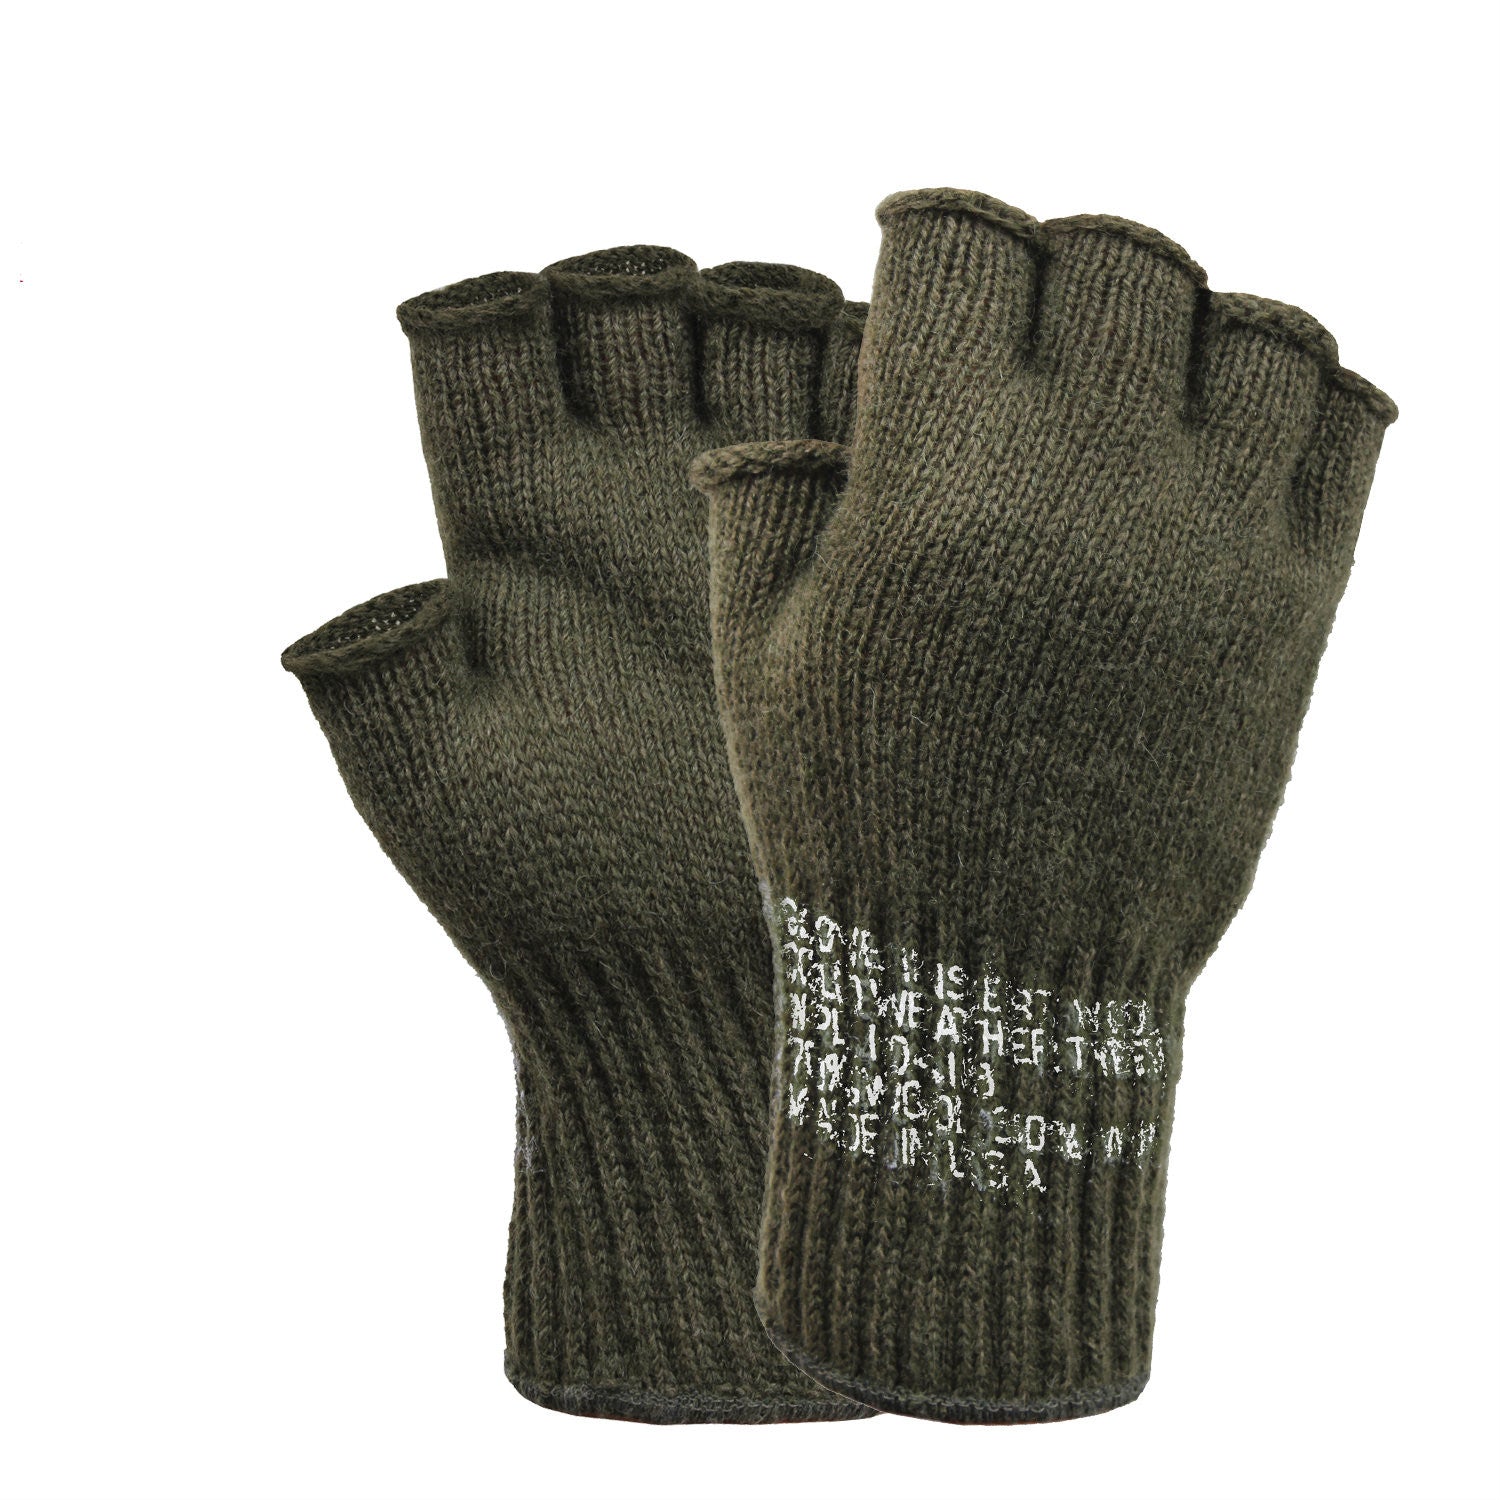 Rothco G.I. Military Fingerless Wool Gloves, Olive Drab